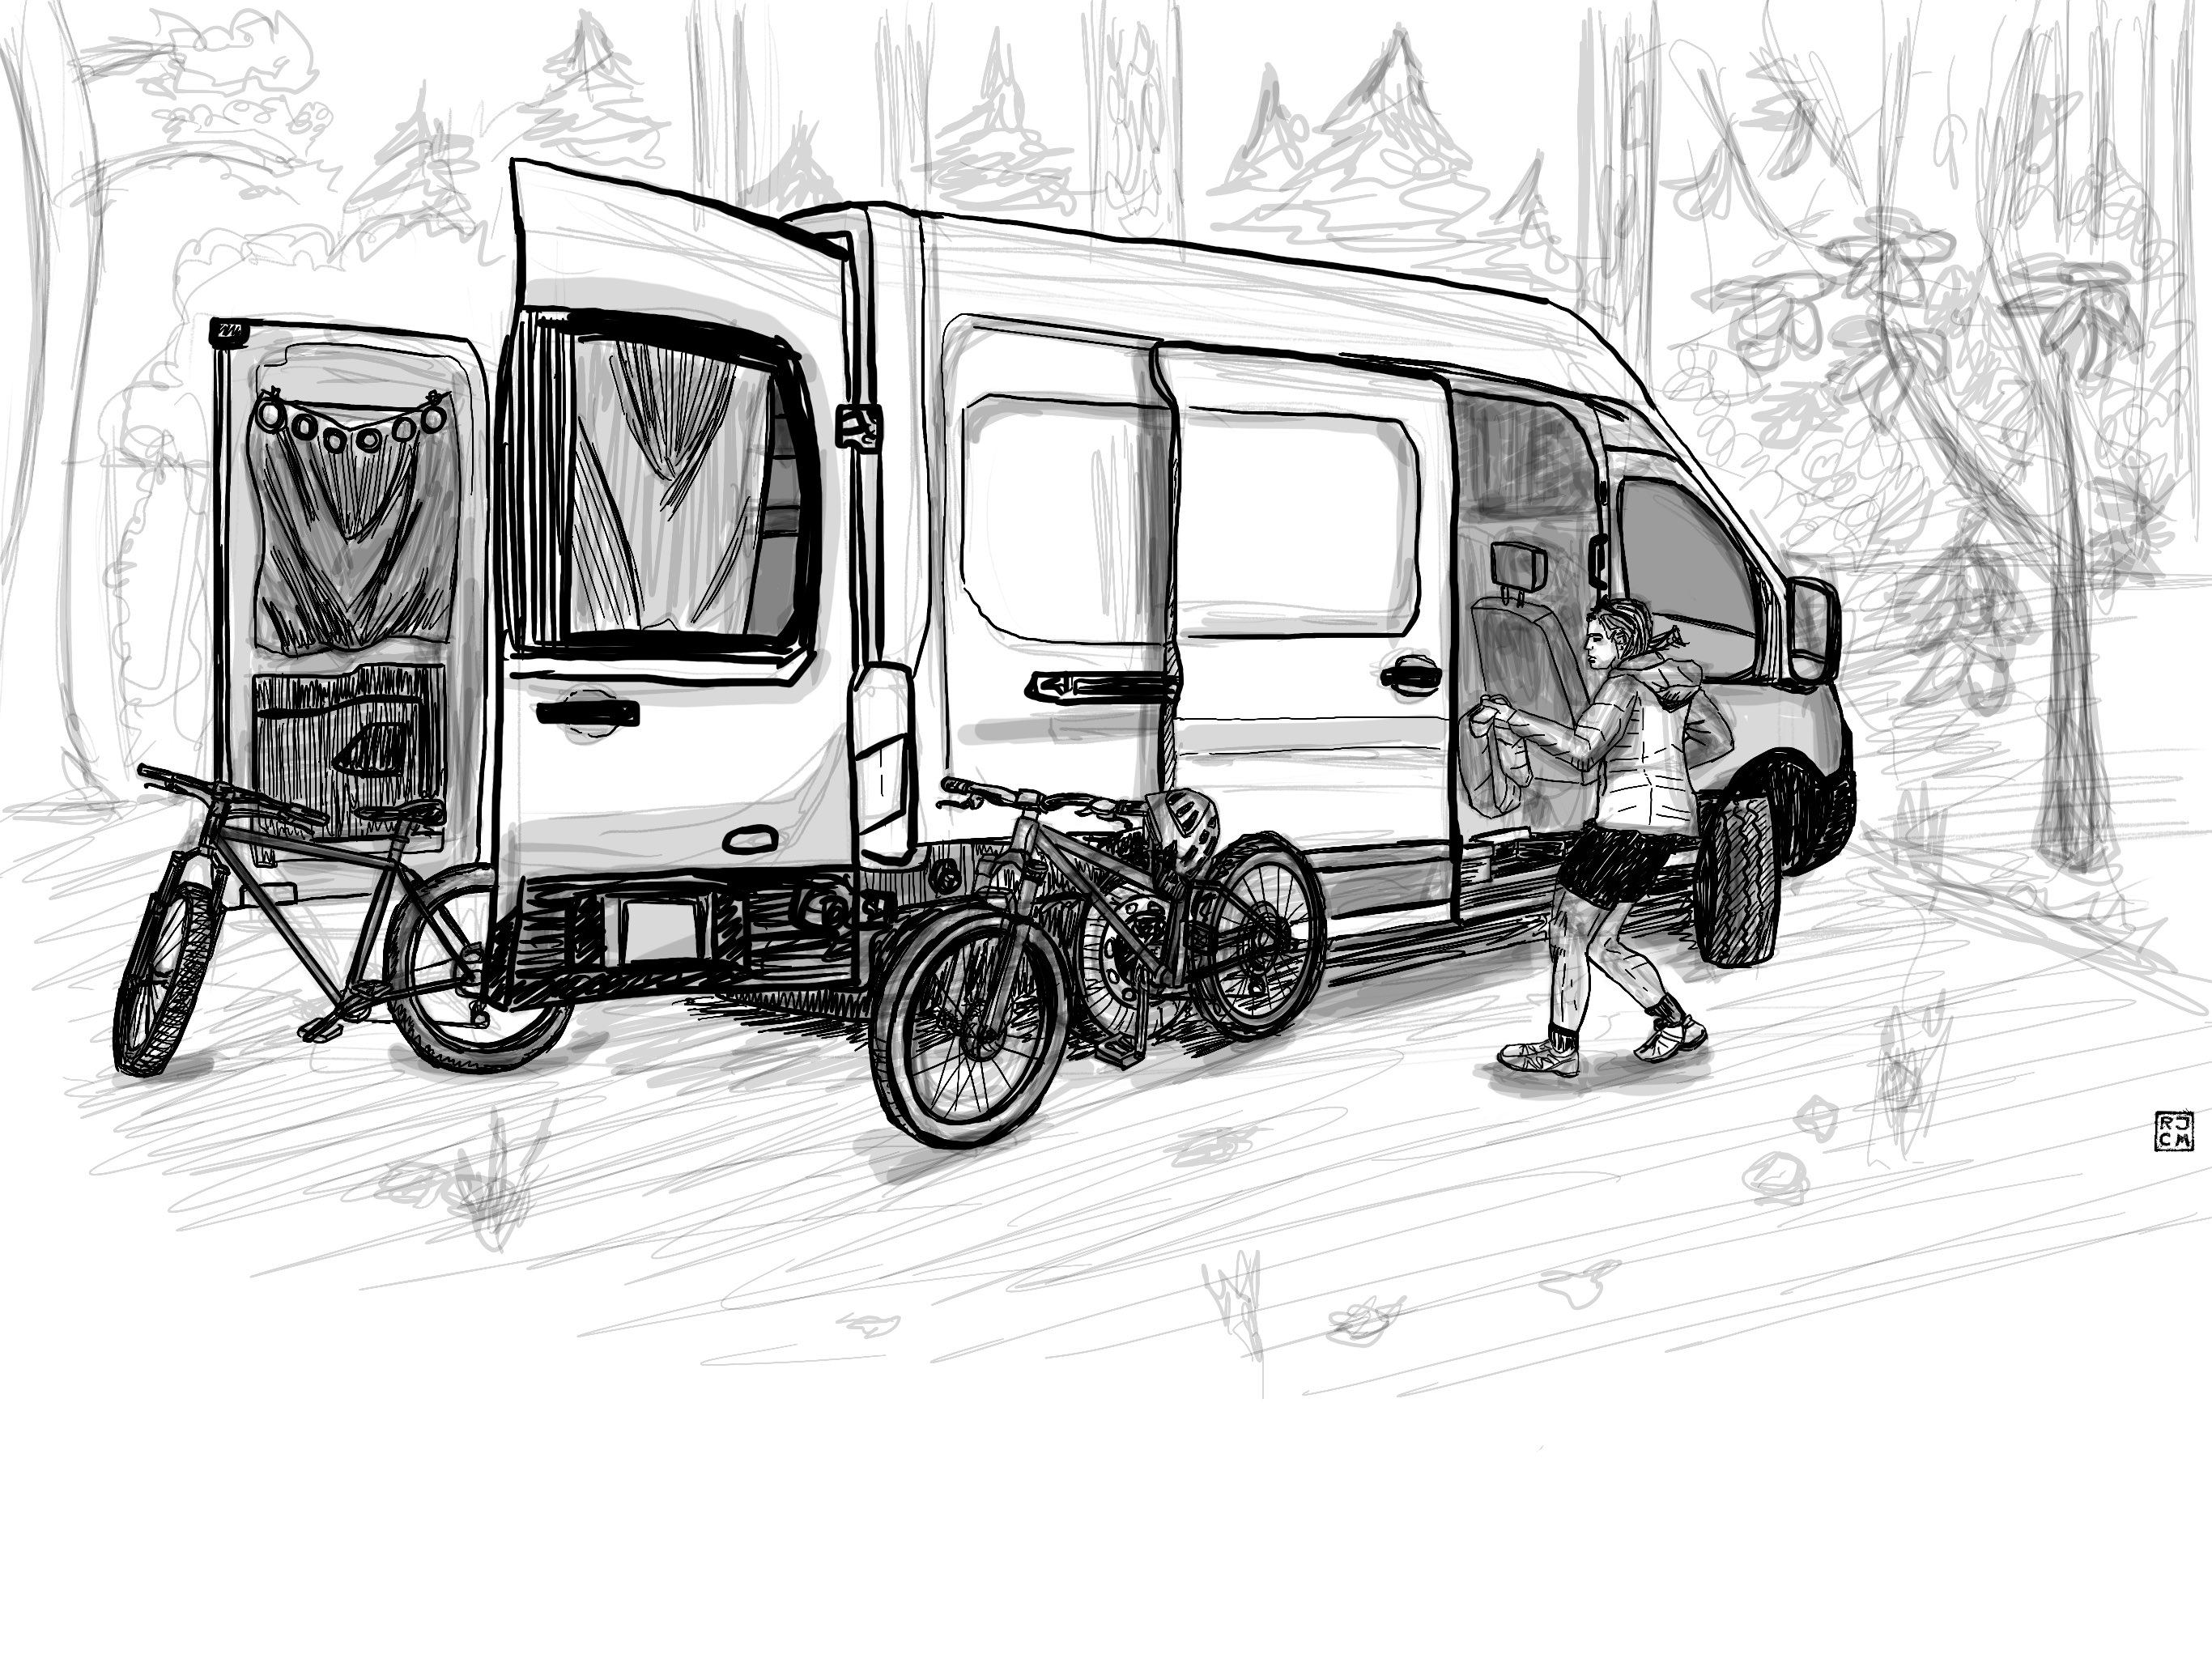 Adventure van set-up with mountain bikes